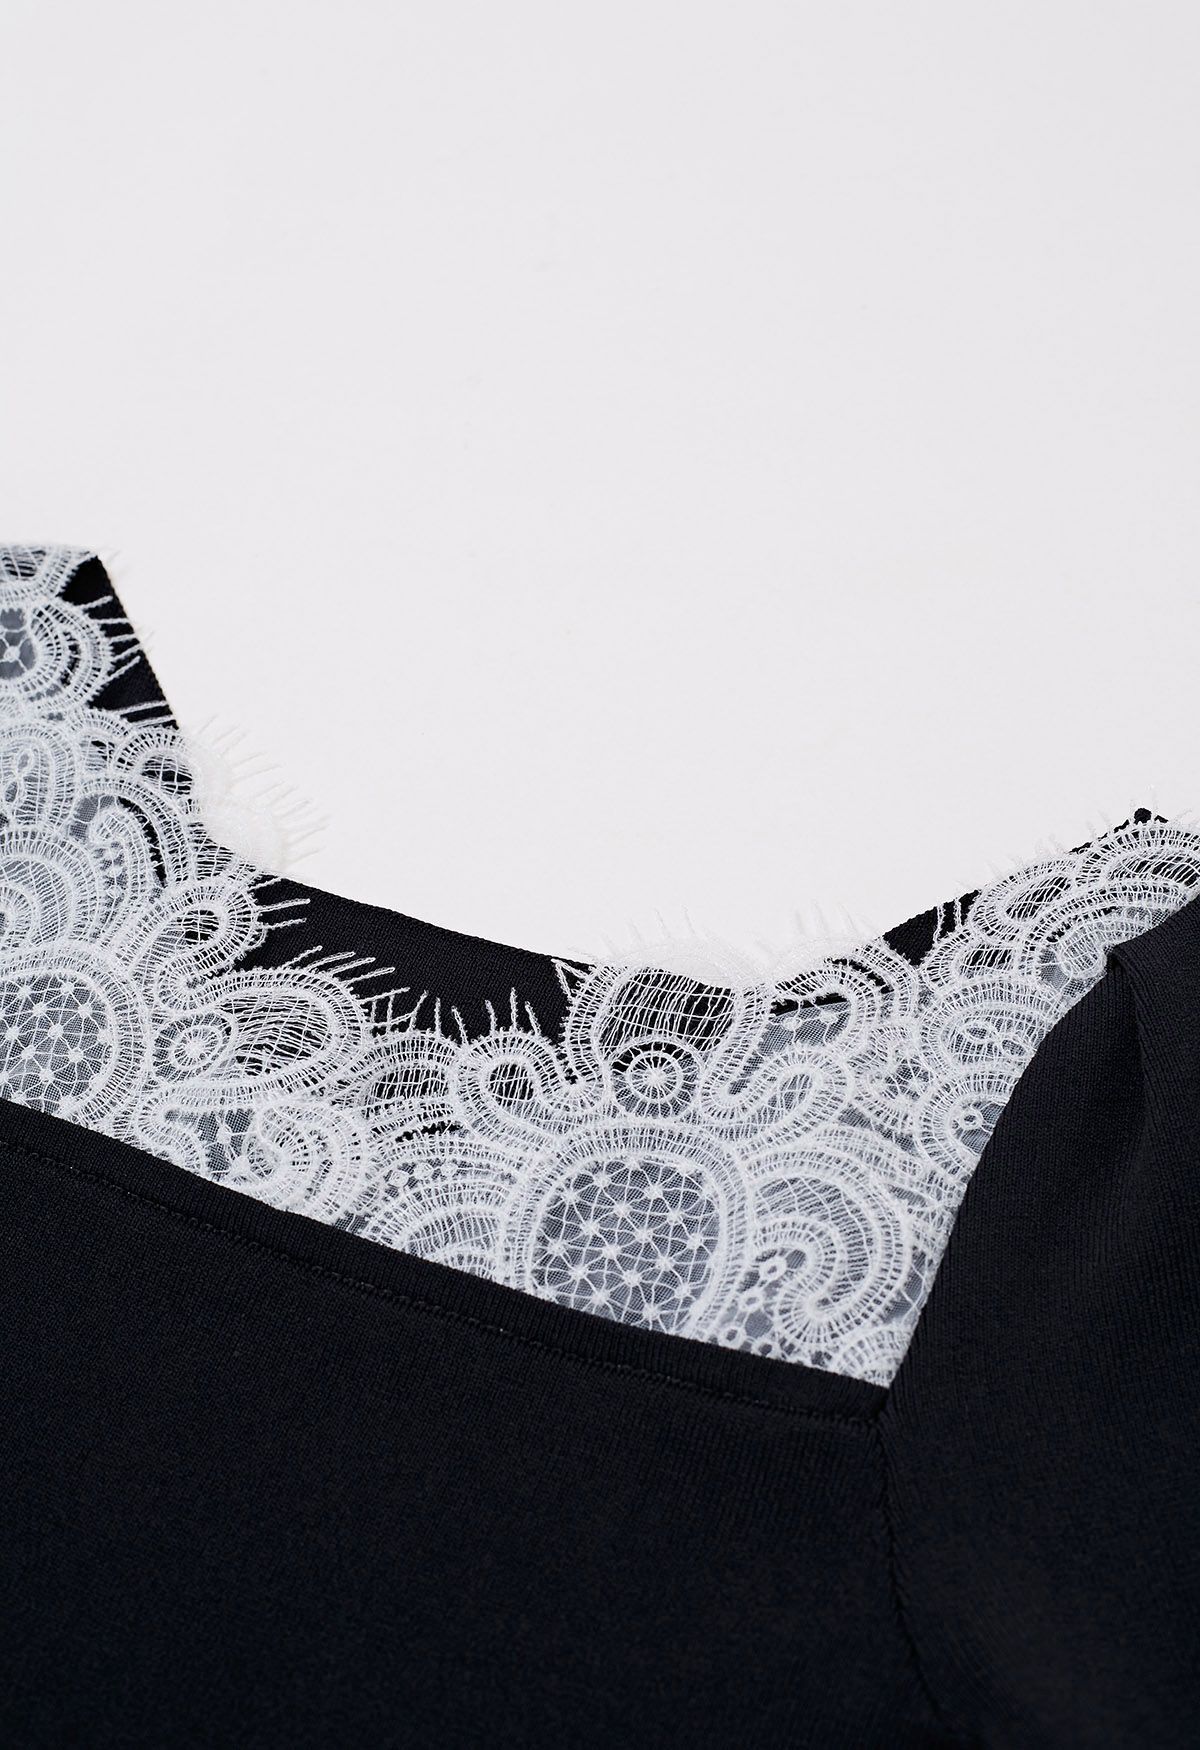 Lace Spliced Square Neckline Knit Top in Black